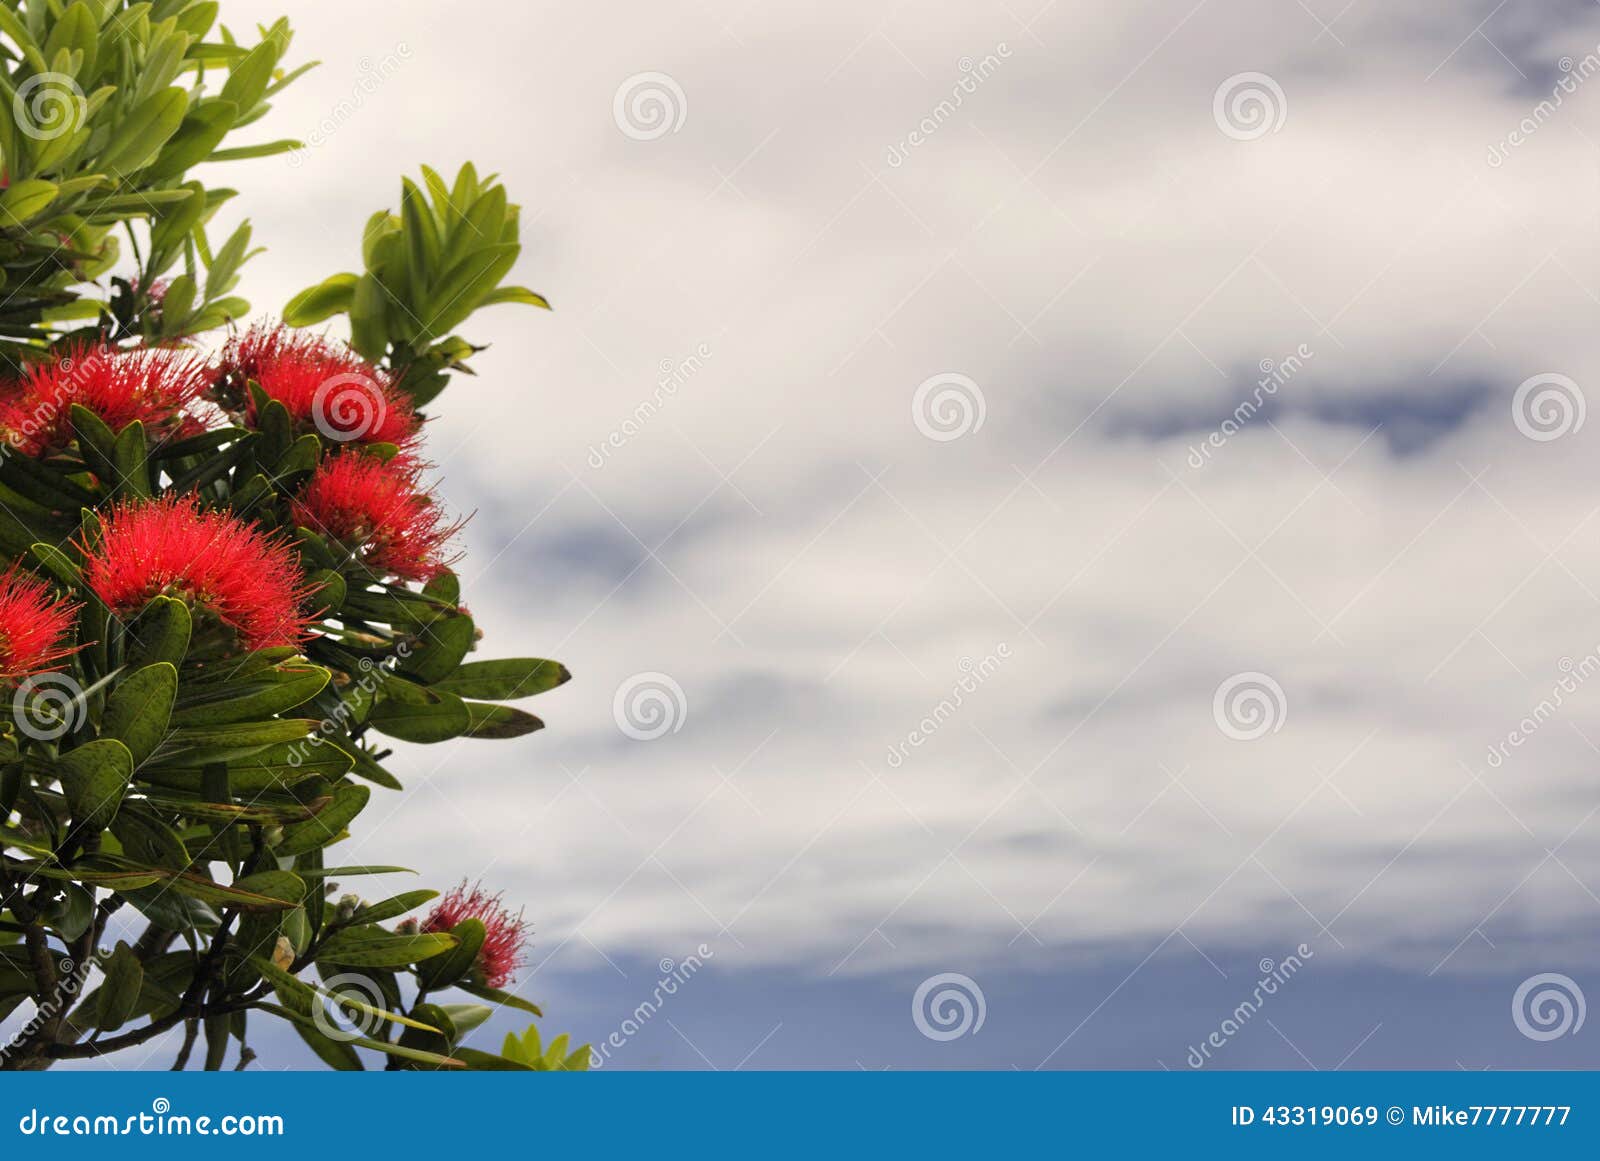 pohutukawa tree, partly cloudy sky. new zealand